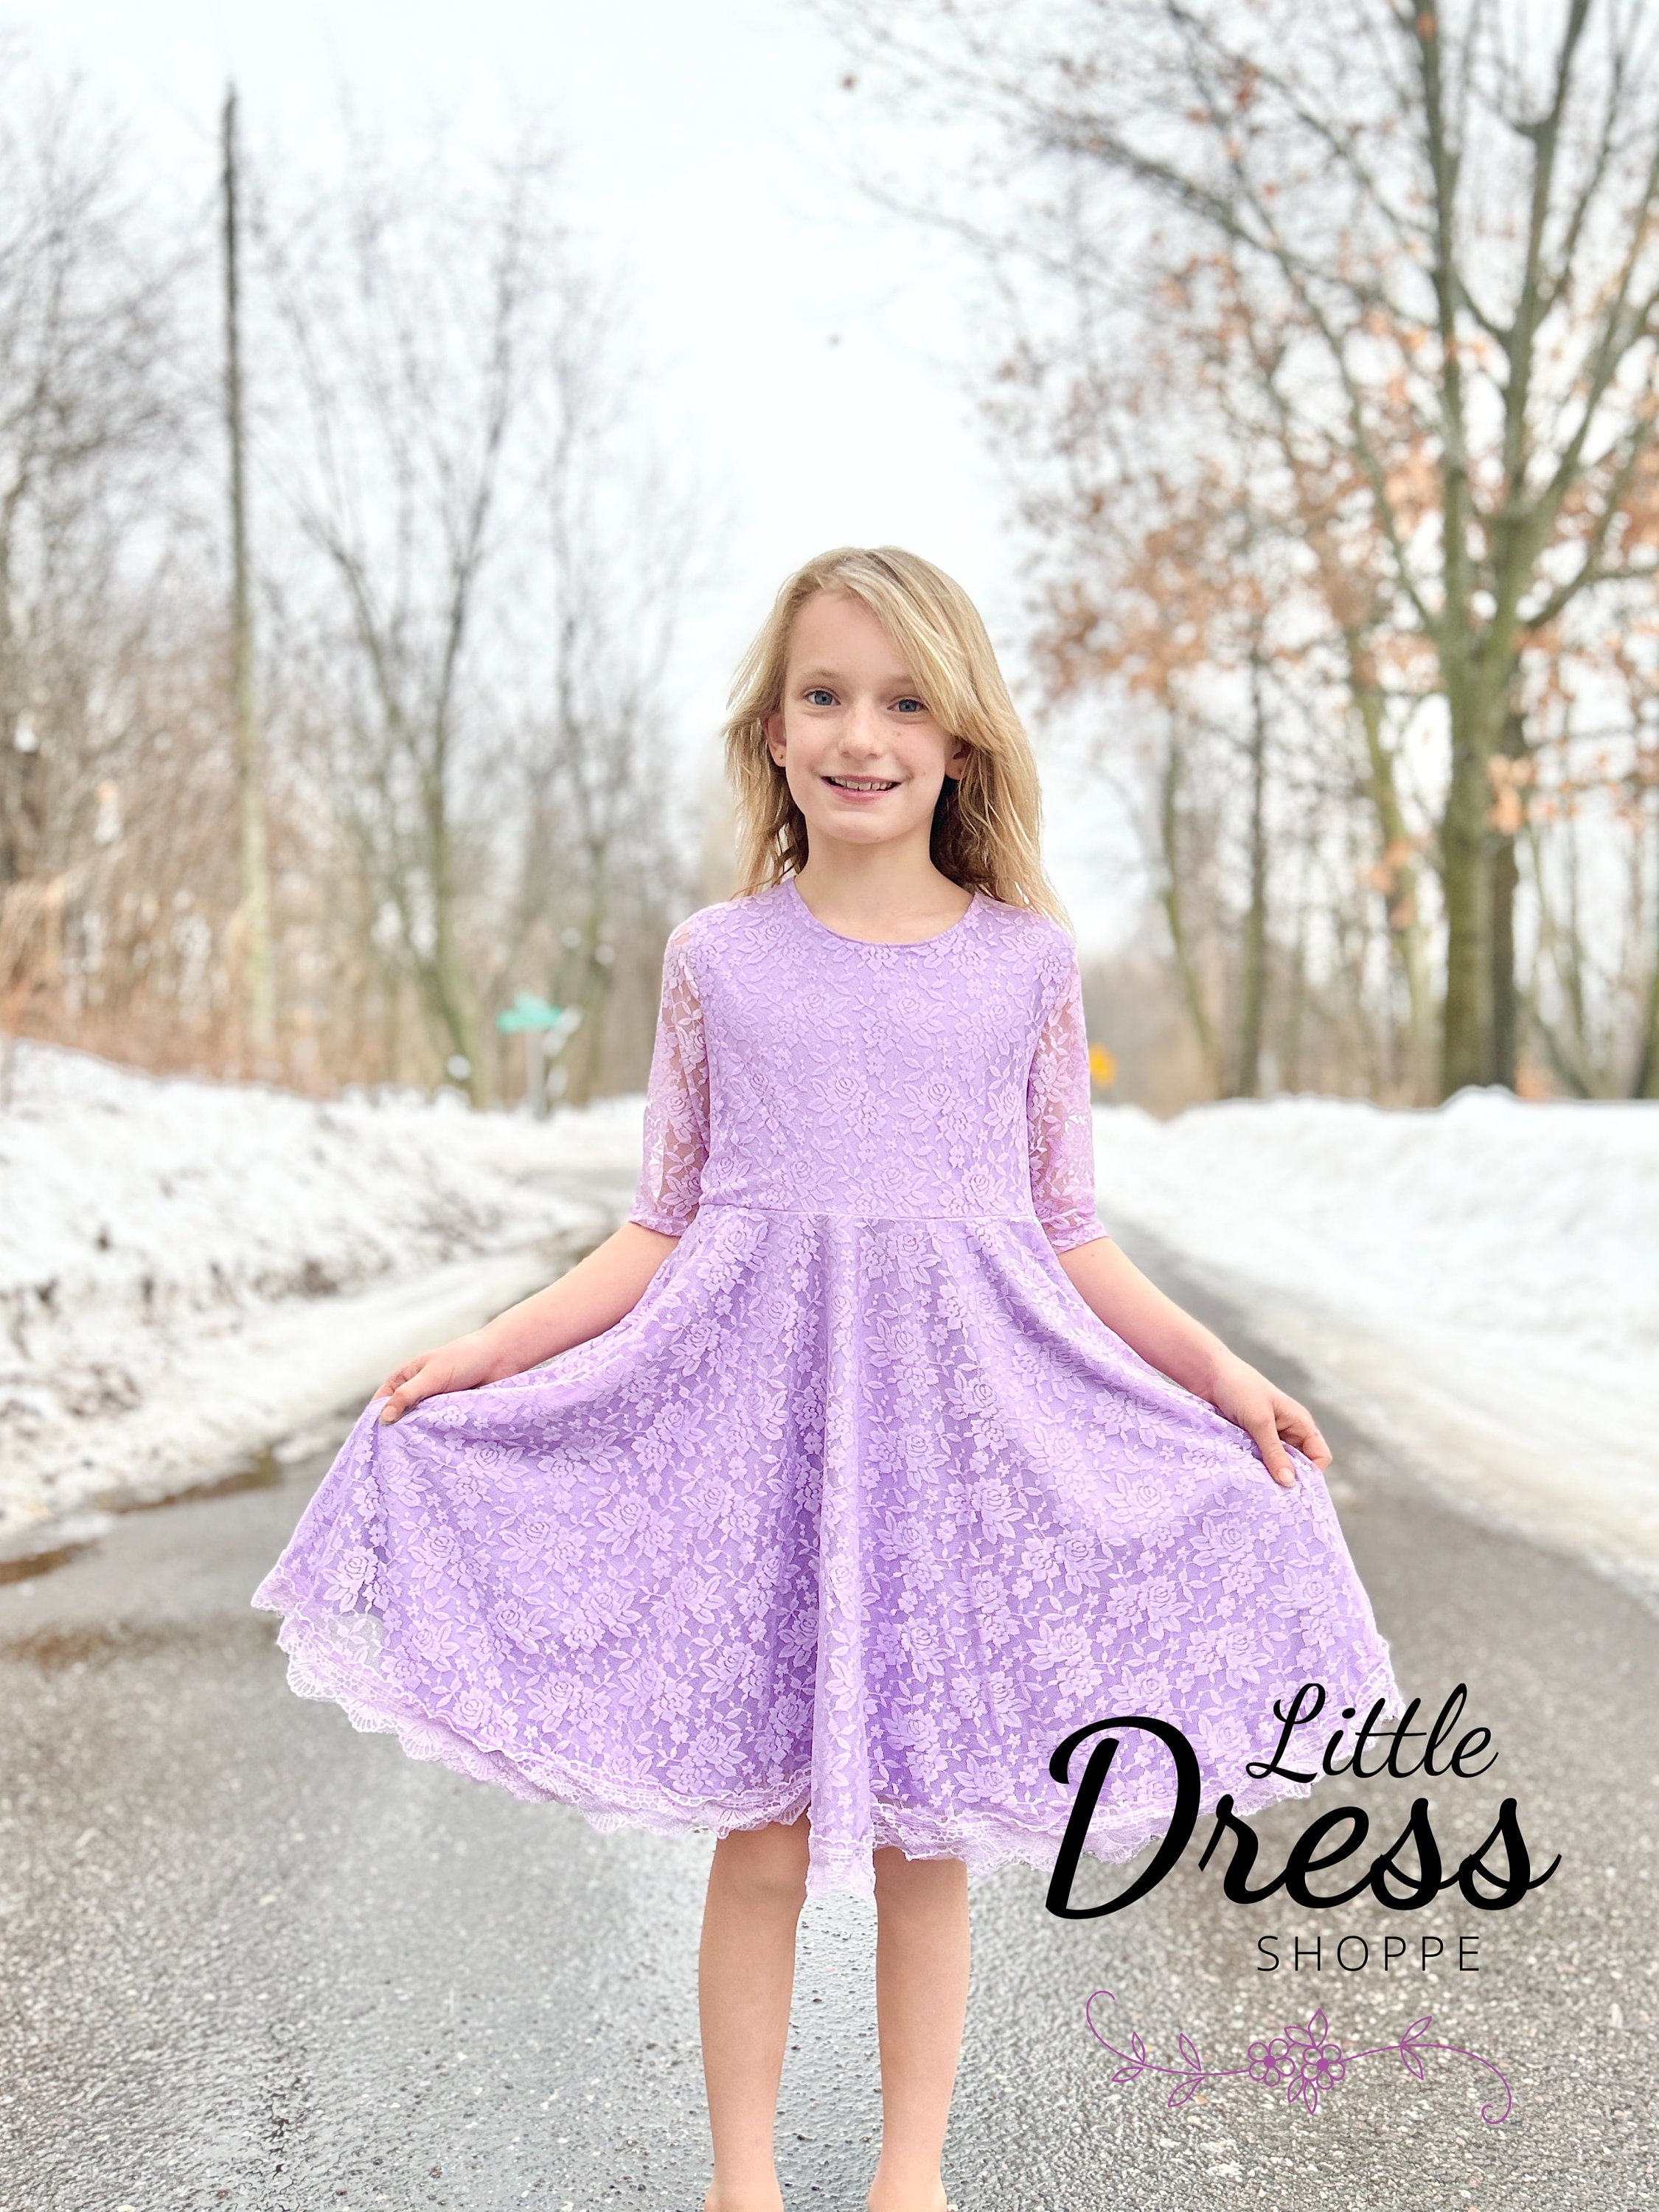 spring dresses for teens